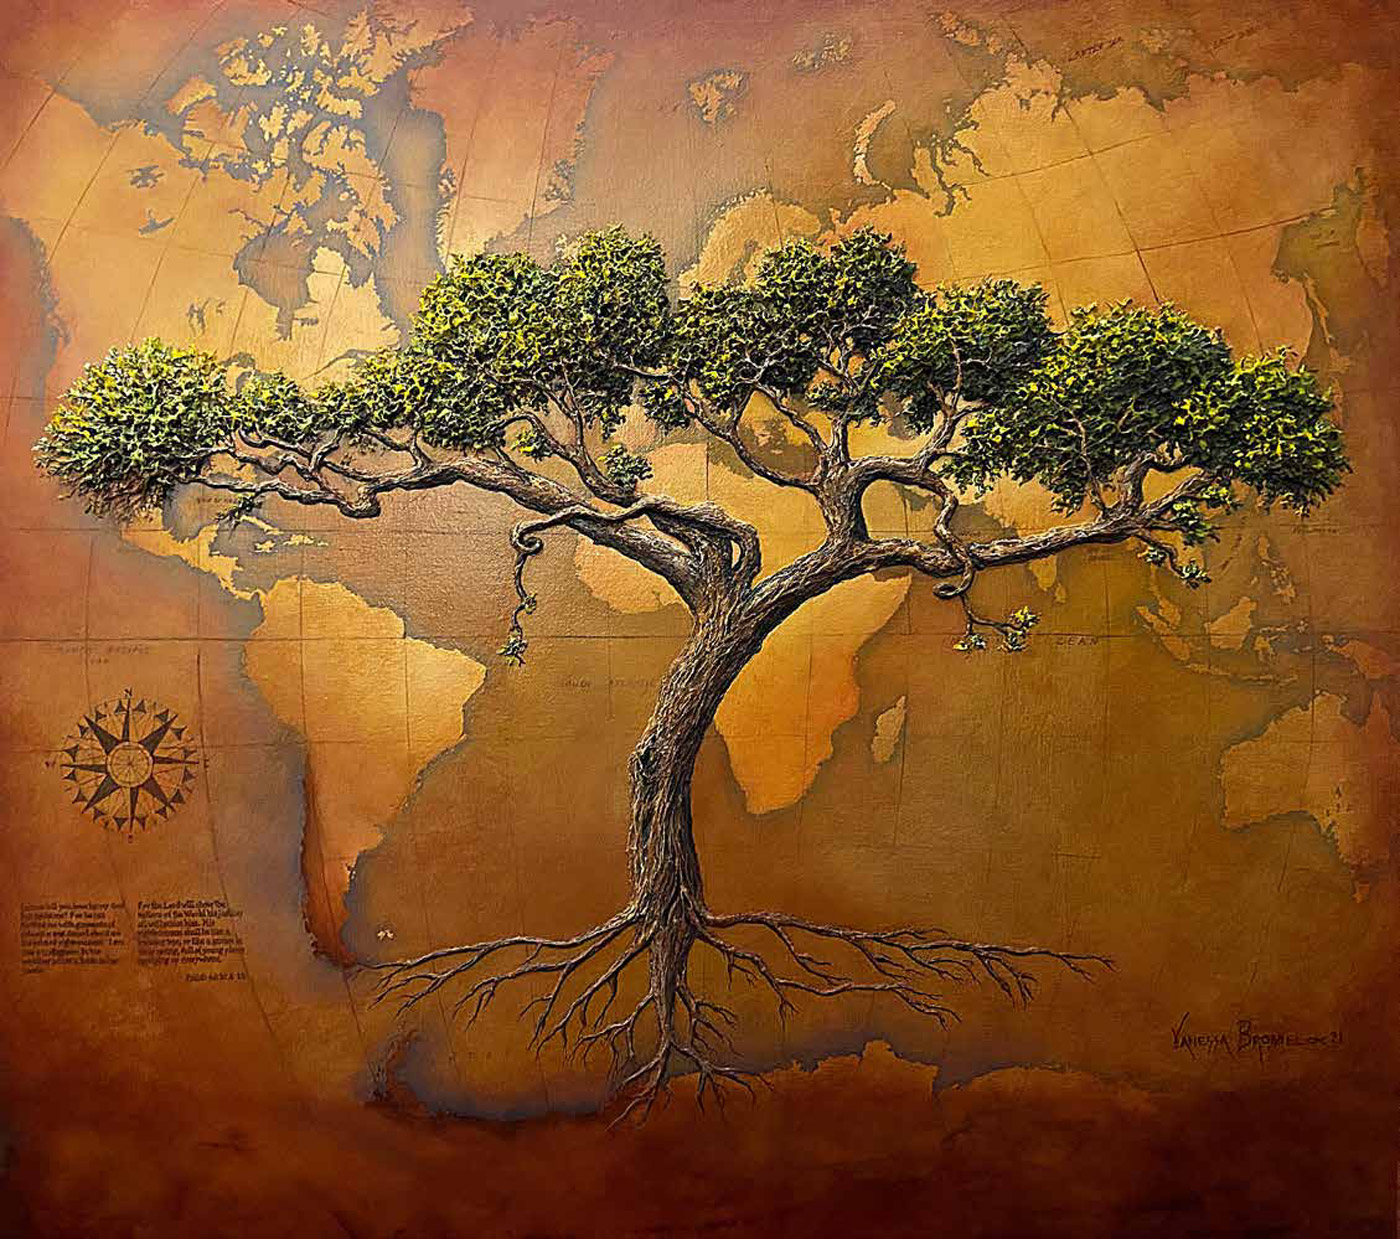 Painting: “Acacia Tree” – Acrylic, Molding Paste, Oil on Canvas - Artist: Vanessa Brobbel